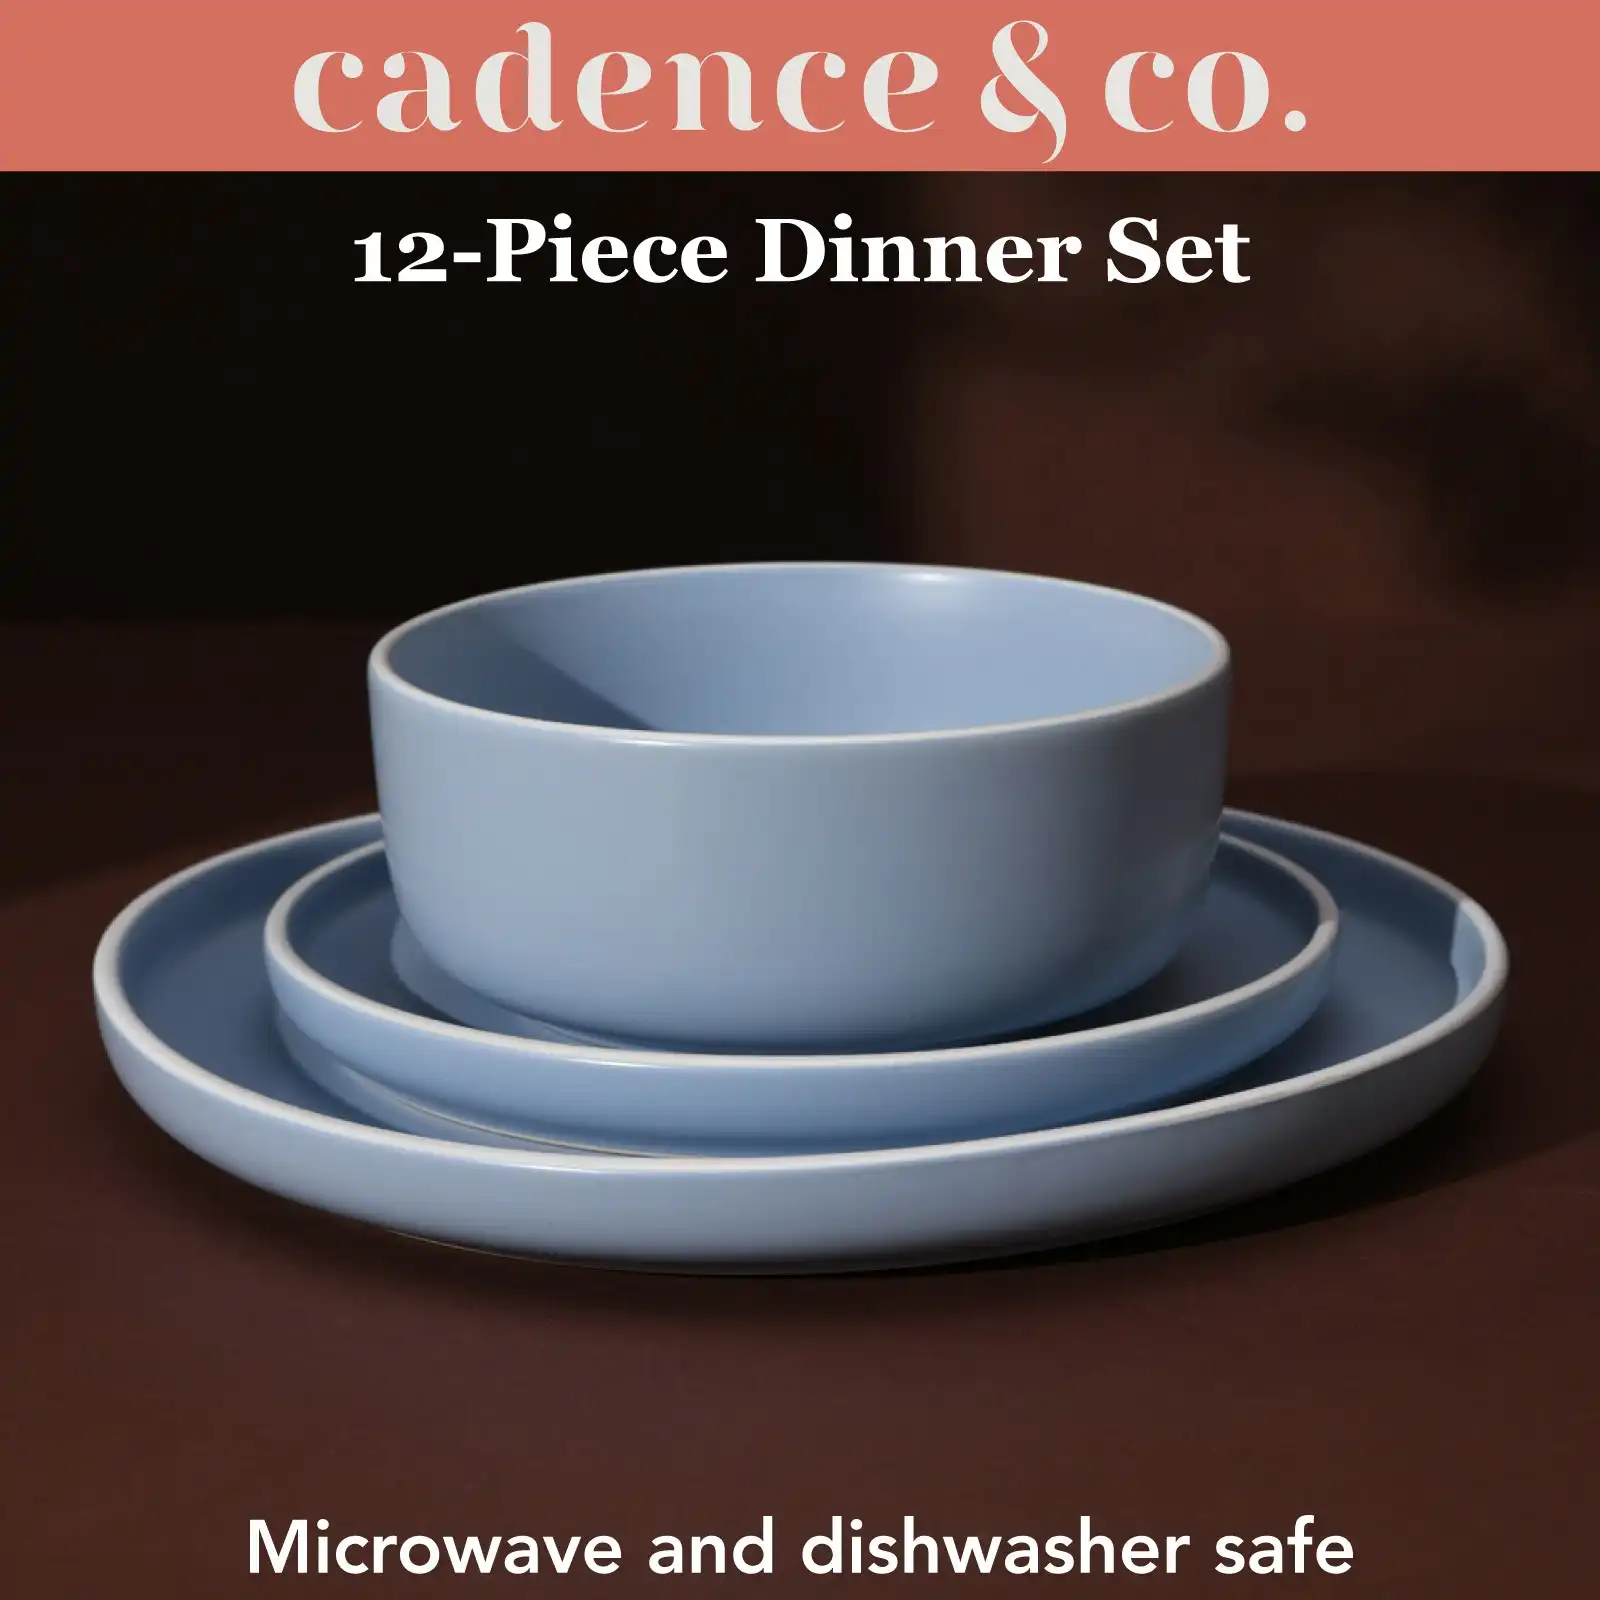 Cadence & Co. Muse 12-Piece Dinner Set Matte Glaze Sky Blue/White 4 person